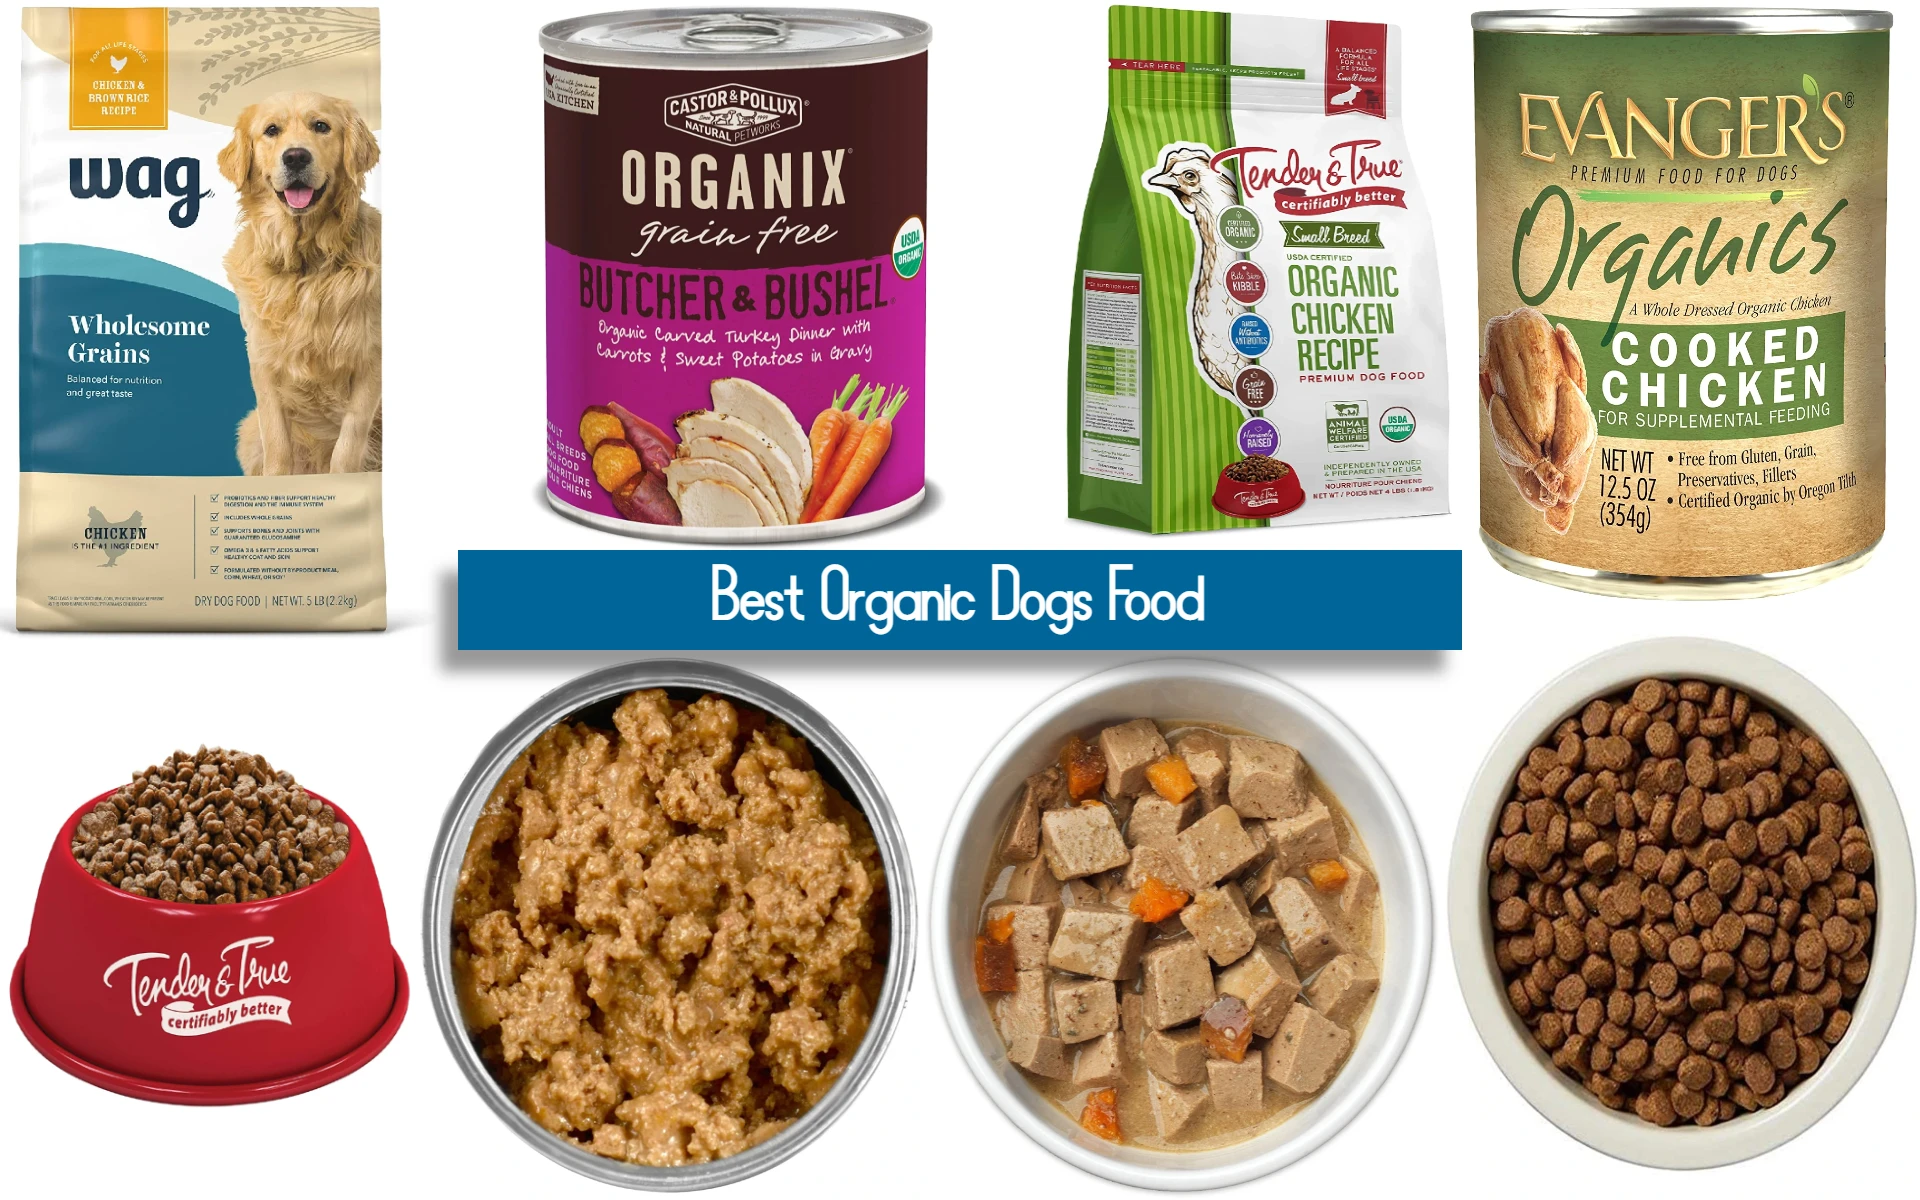 Best Organic Dogs Food